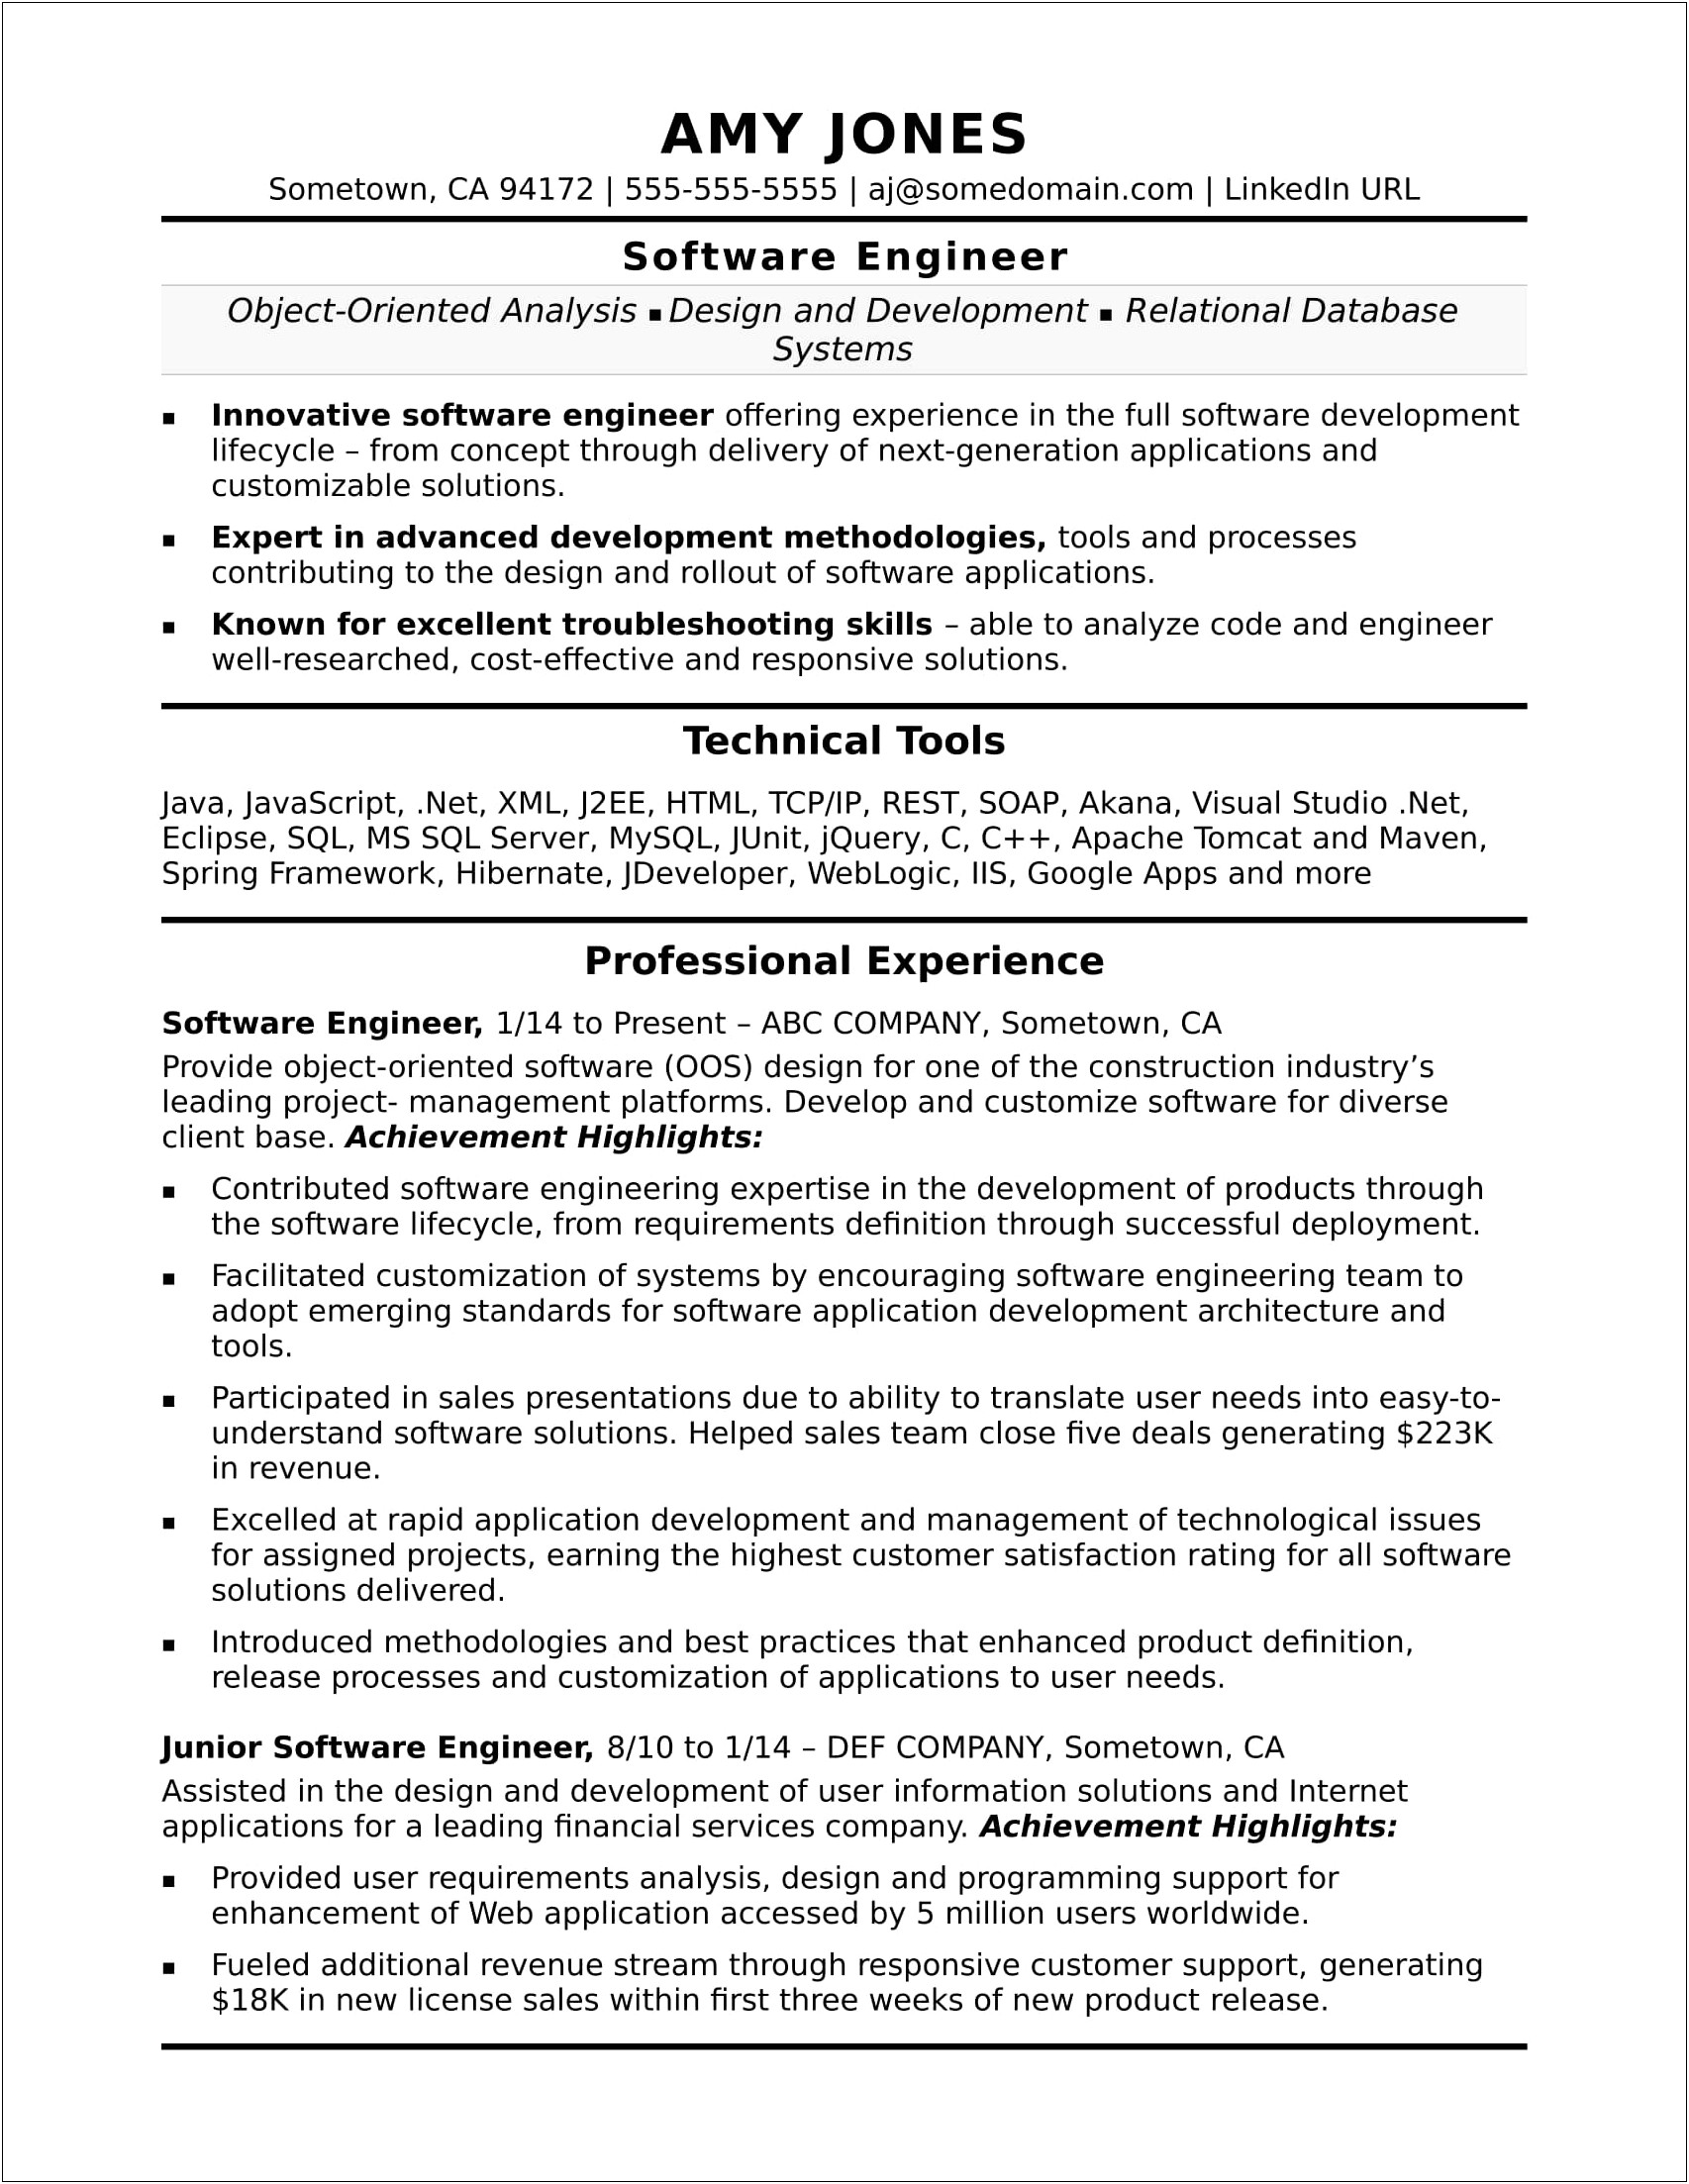 Free Summary Of Qualifications Sample Resume